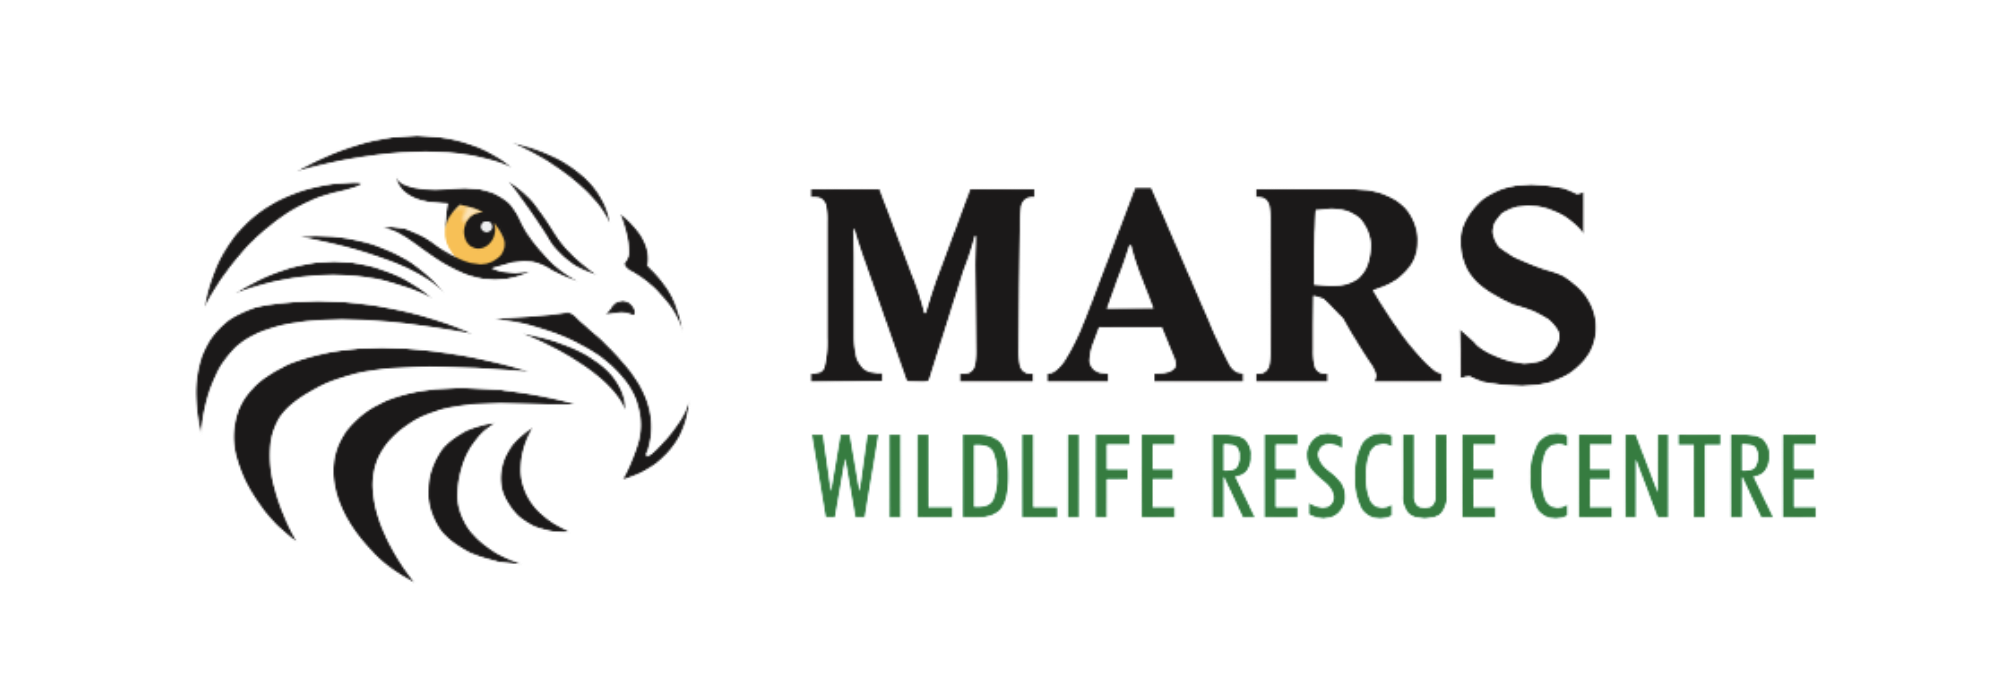 MARS Wildlife Rescue Homepage - MARS Wildlife Rescue